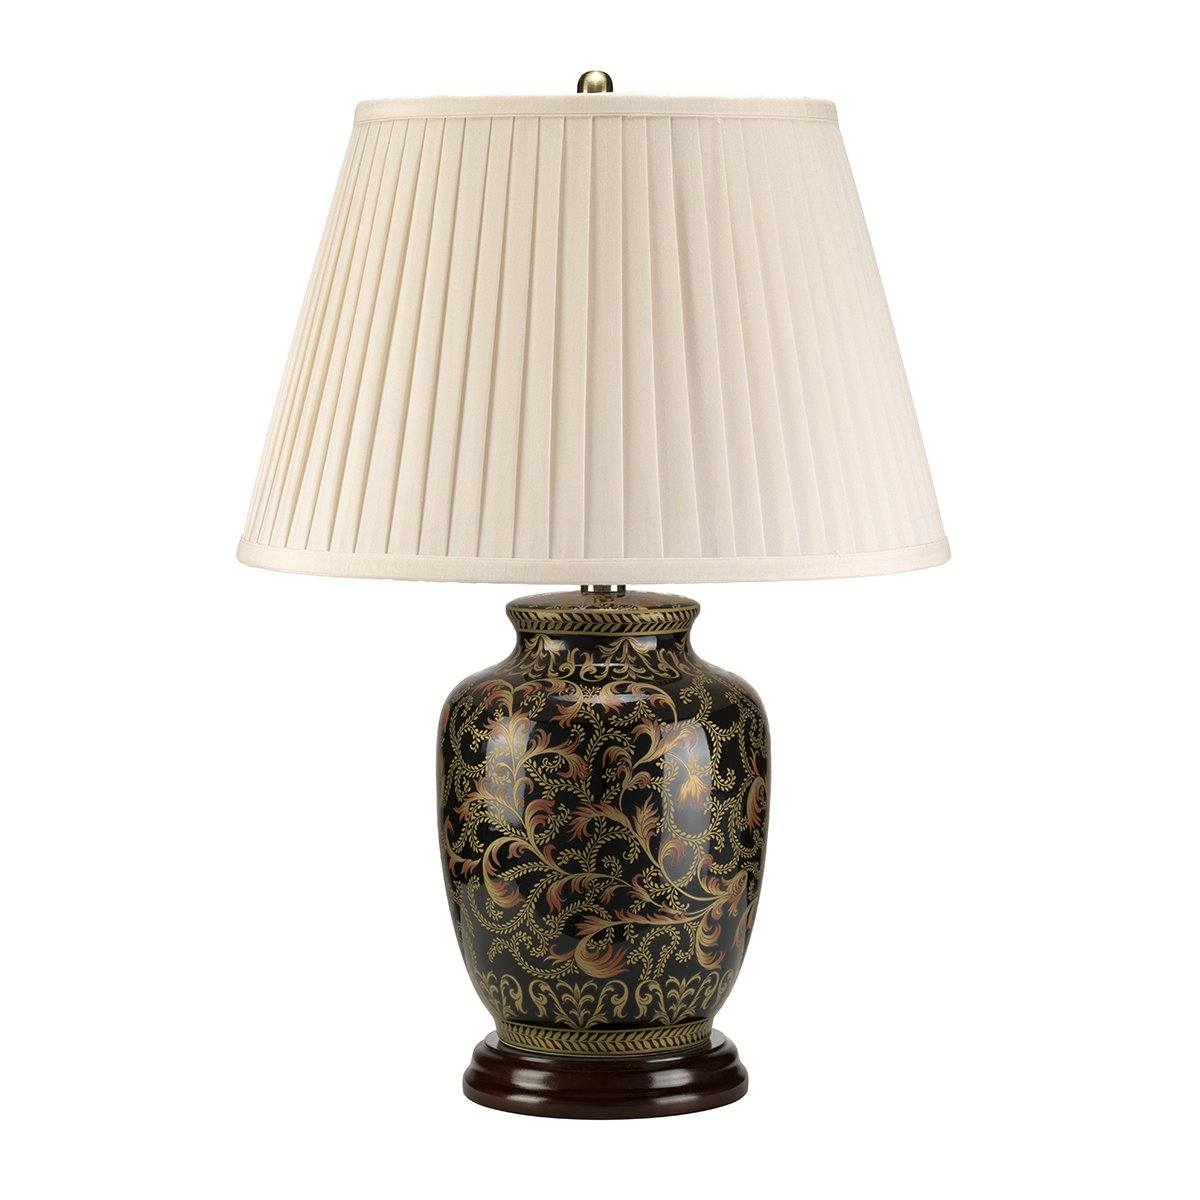 Mottingham Gold/Black Small Table Lamp c/w Shade - ID 8382